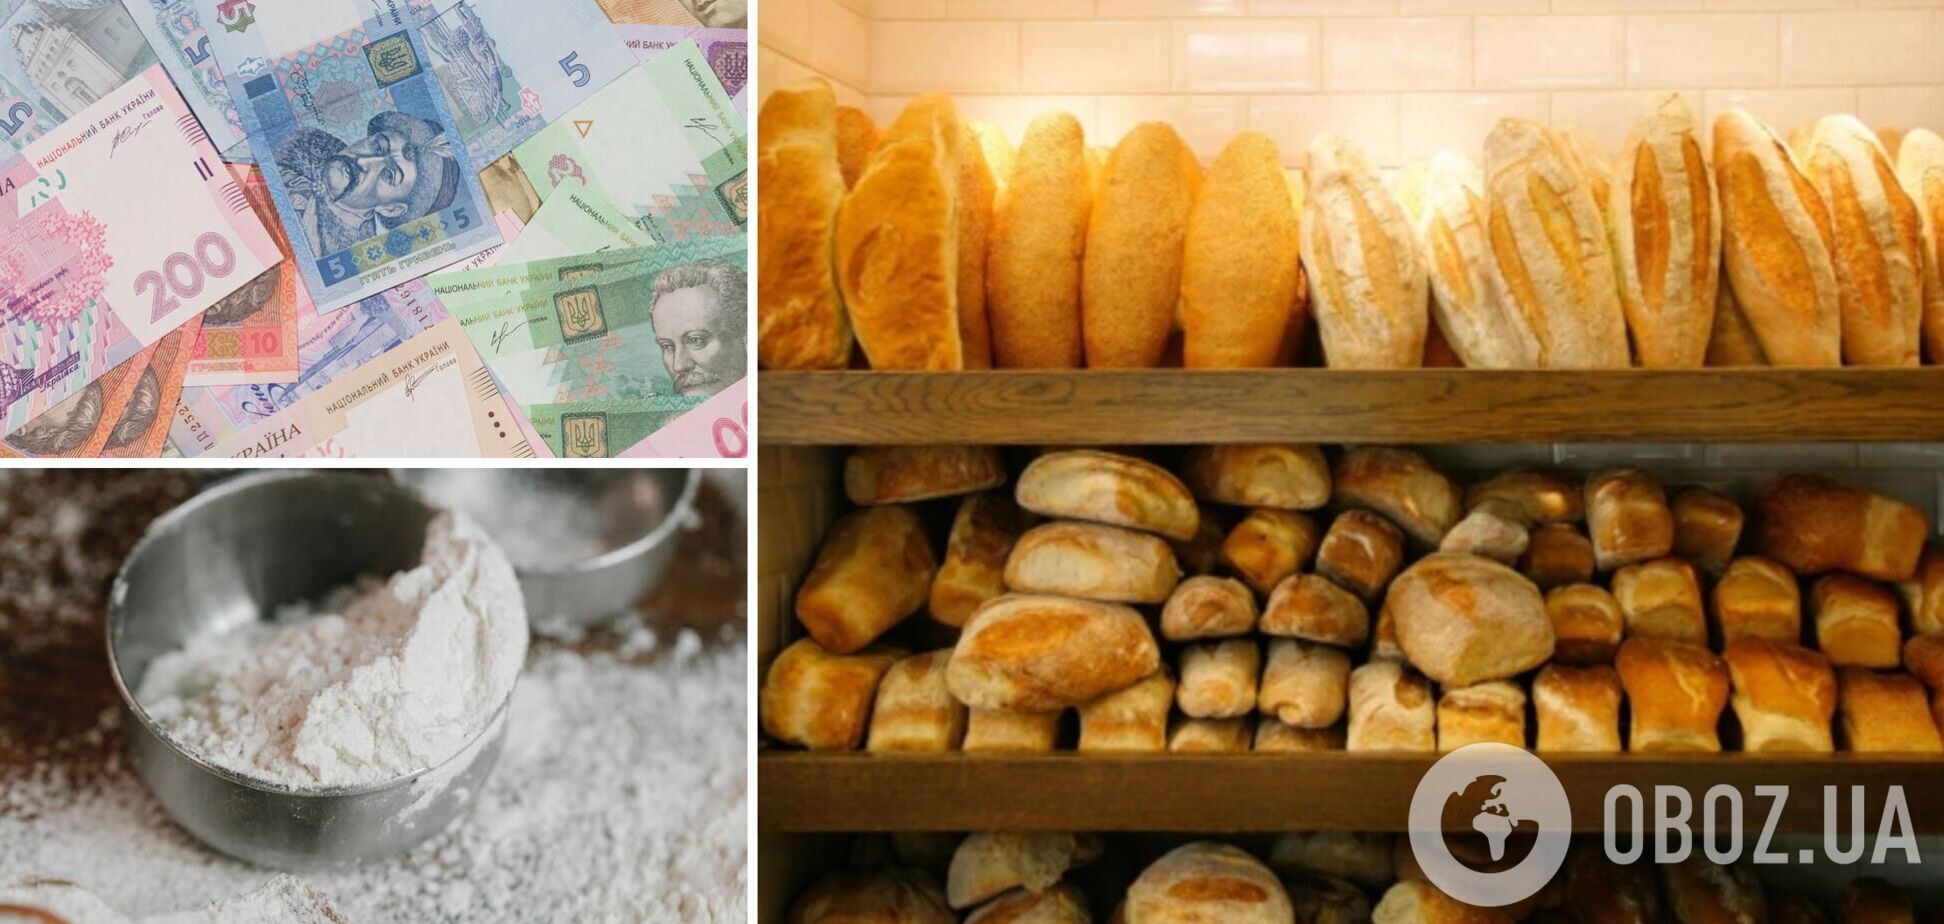 Цены на хлеб в Украине вырастут